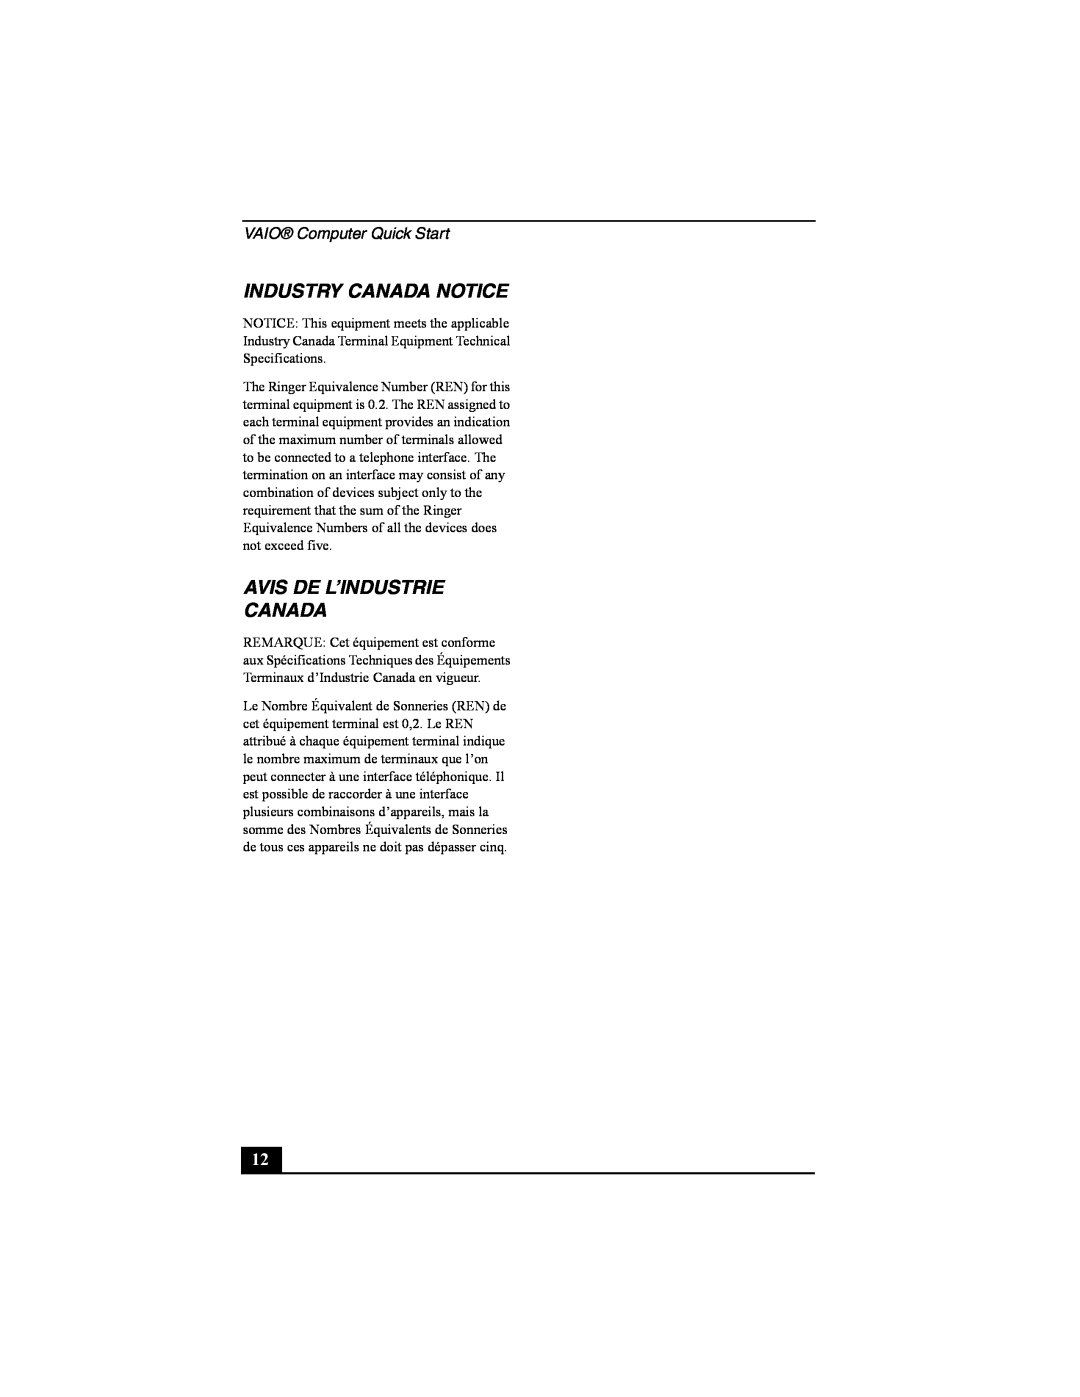 Sony PCG-FRV manual Industry Canada Notice, Avis De L’Industrie Canada, VAIO Computer Quick Start 